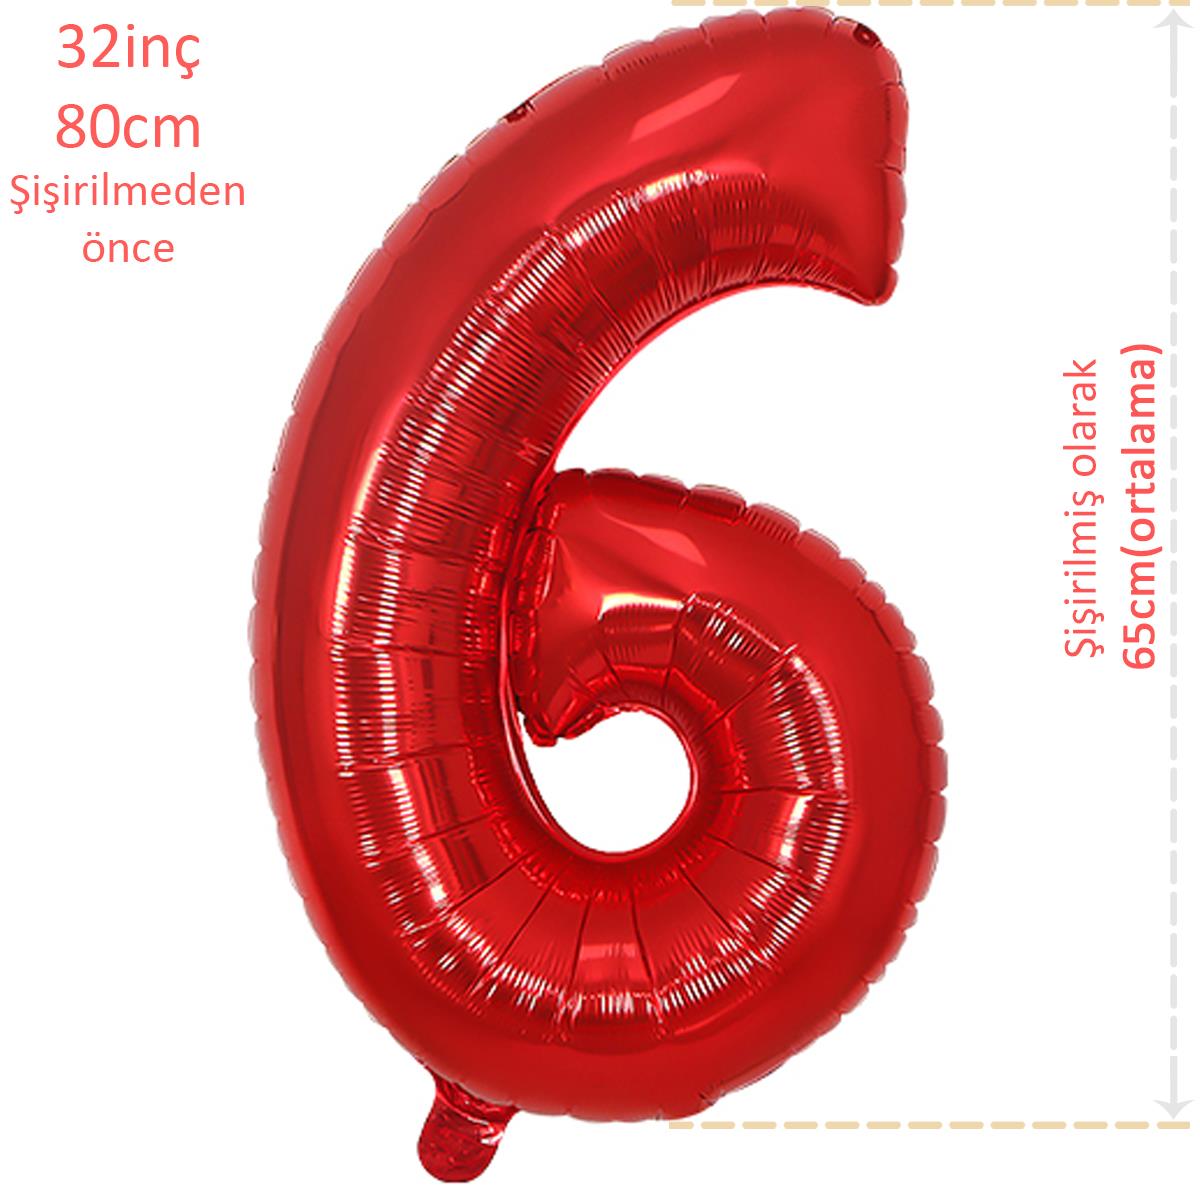 Rakam Folyo Balon Kırmızı 6 Rakamı 32inç 80cm